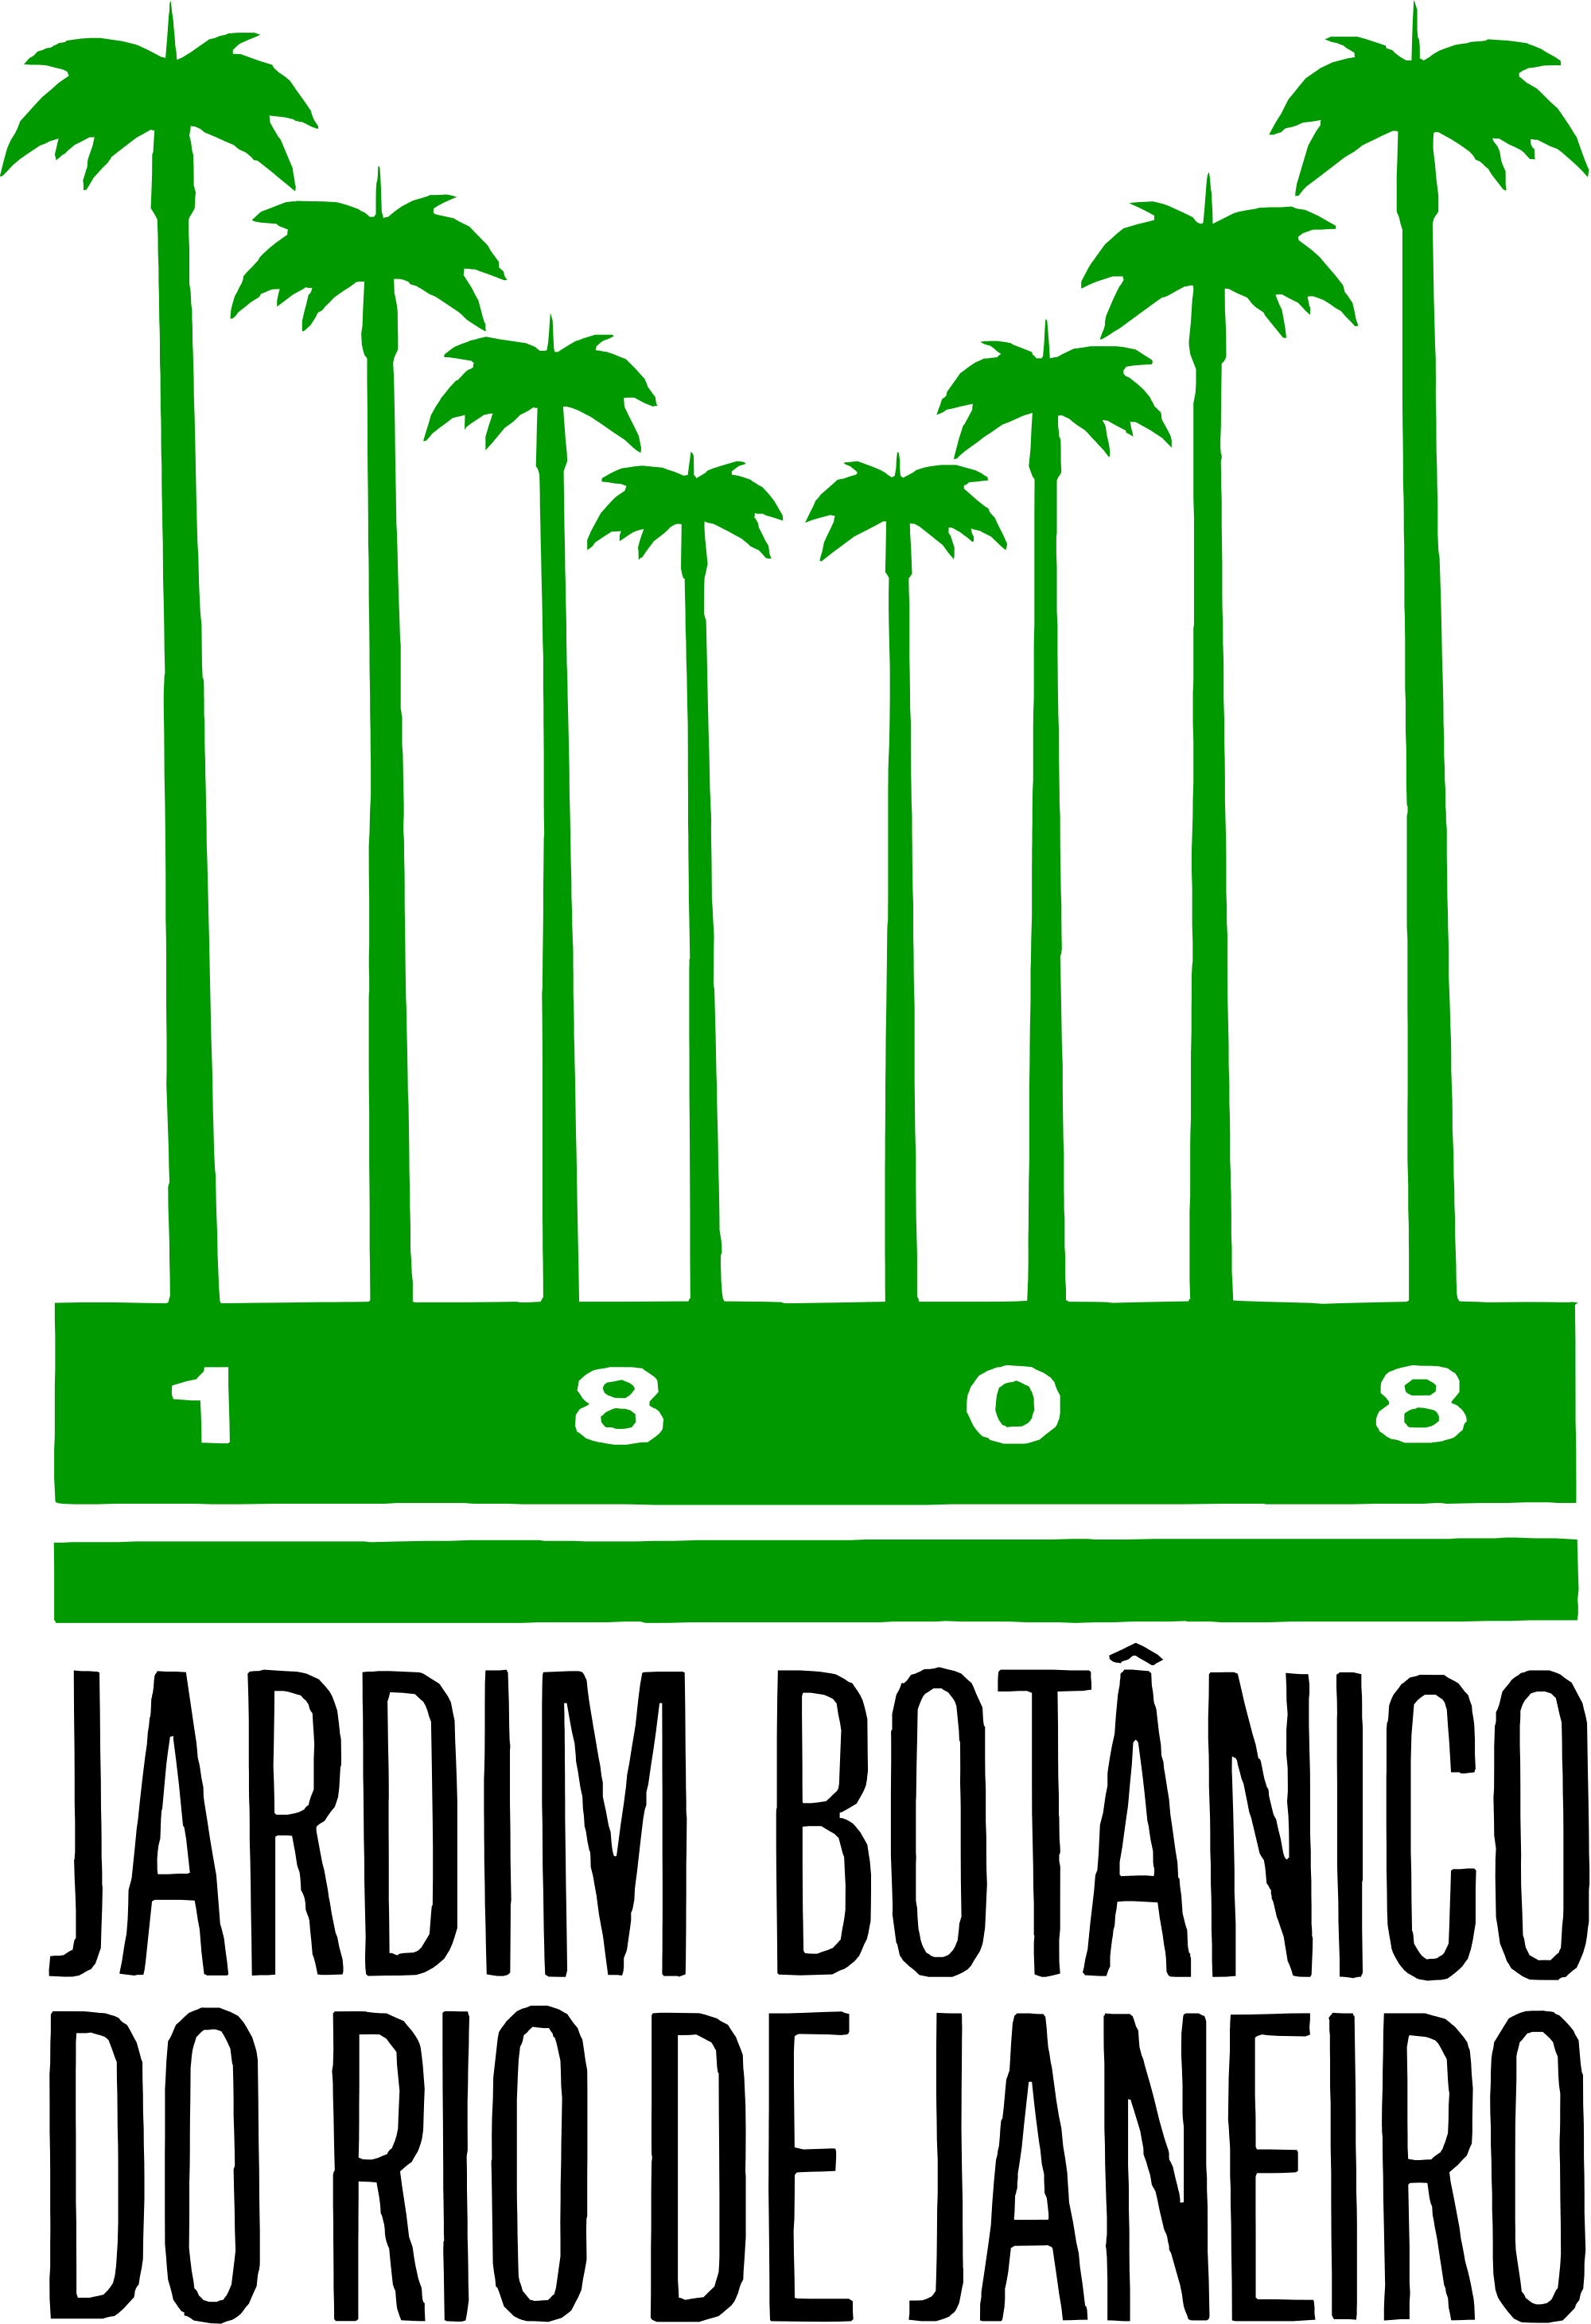 Jardin Botanico (RJ) logo.png